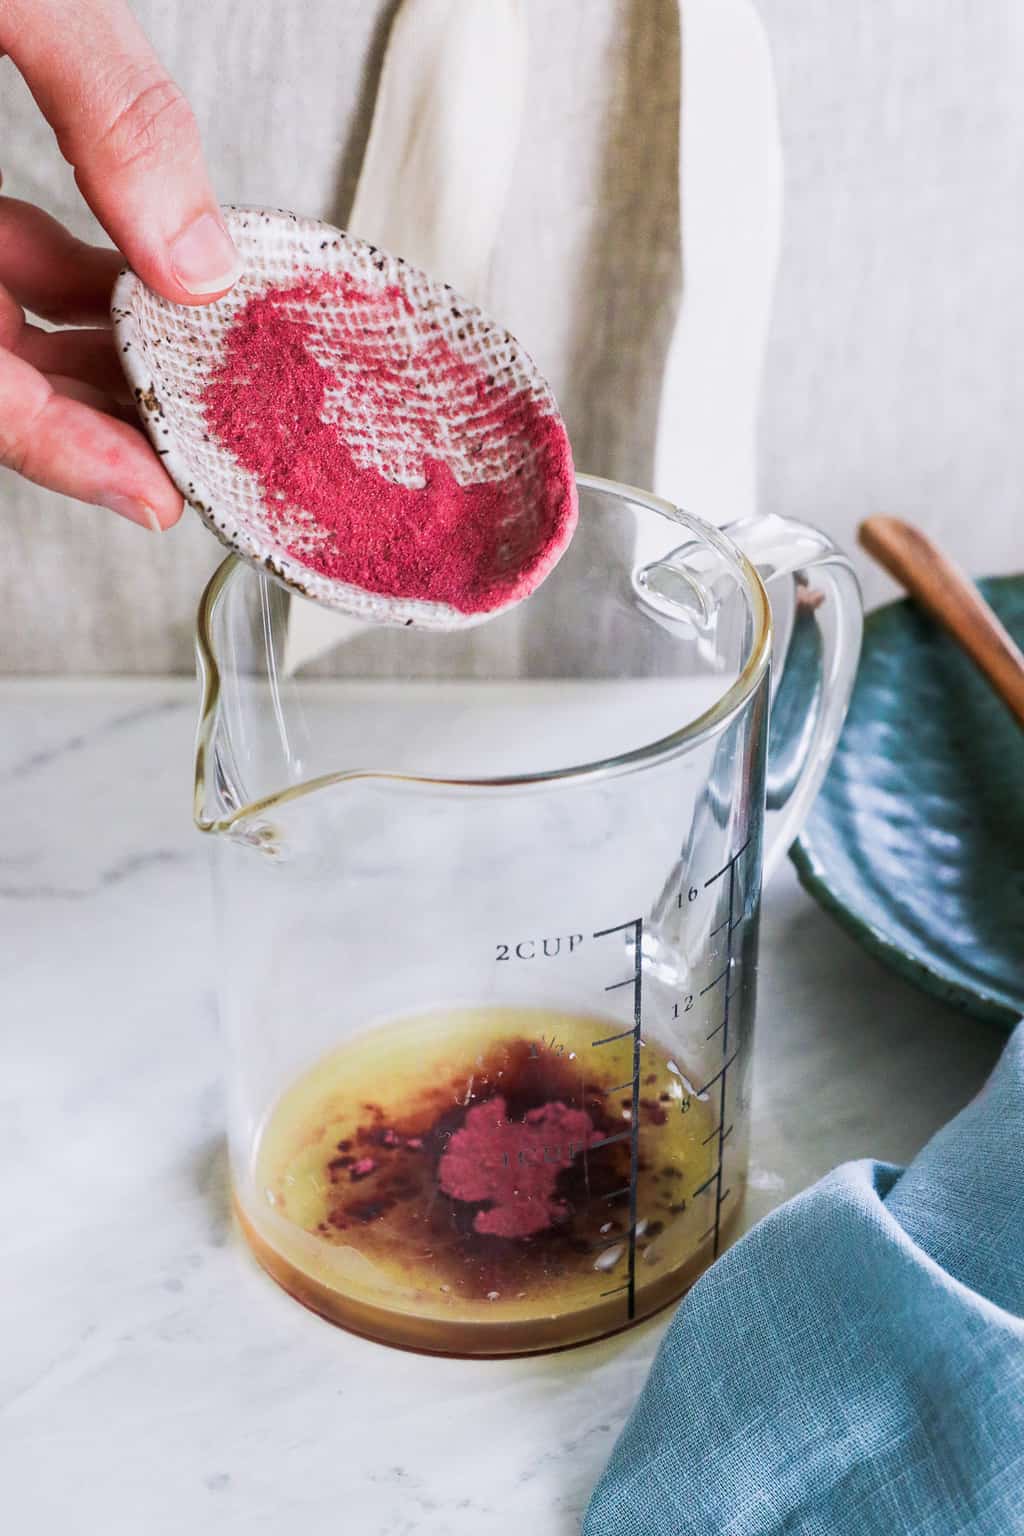 Add raspberry powder to add natural color to lip balm